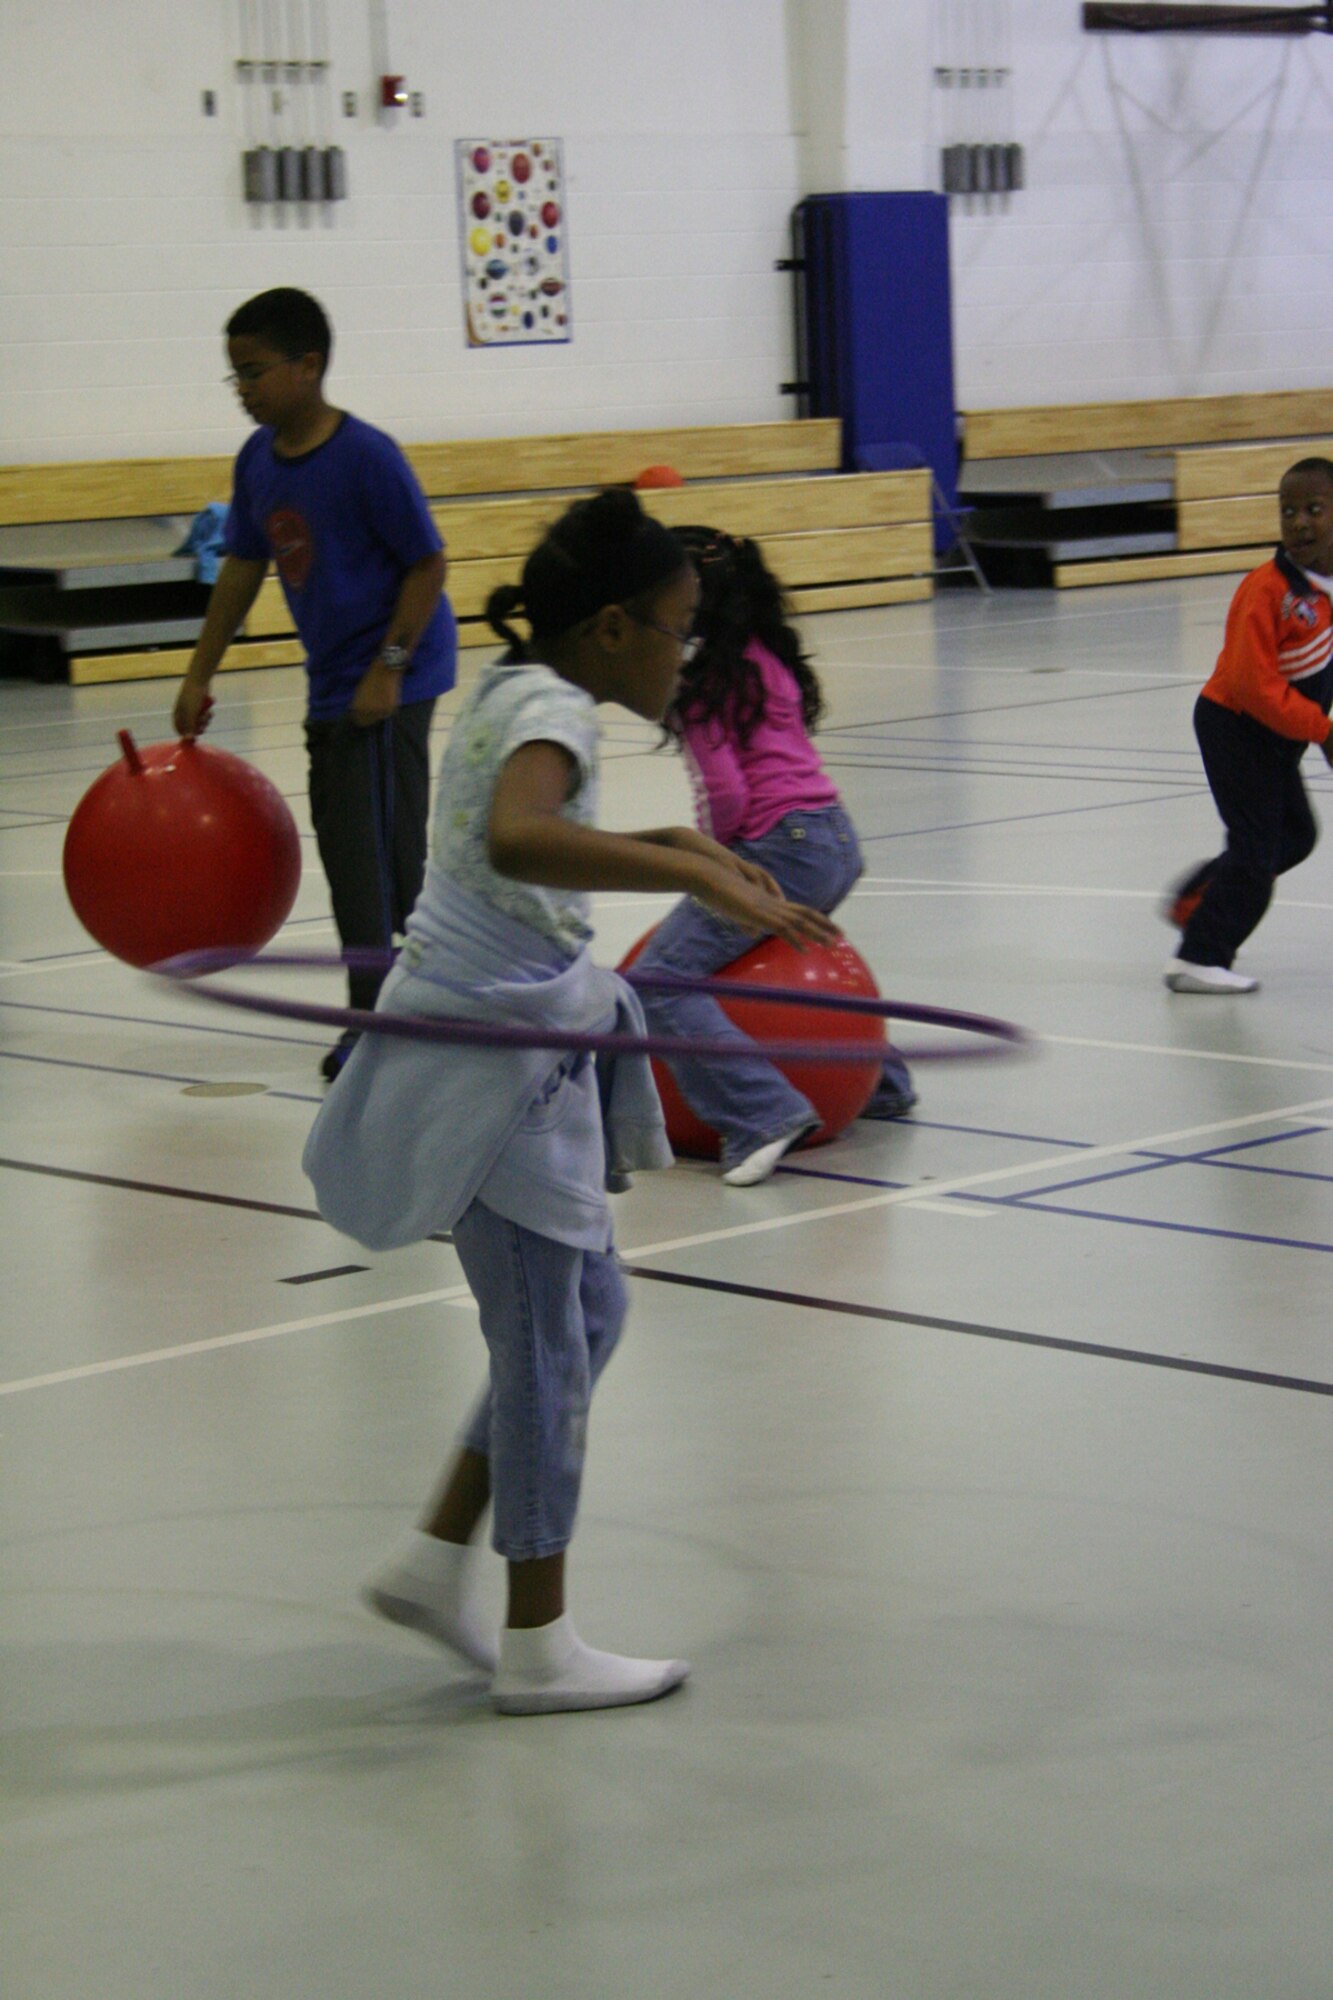 Indya Drew hula hoops her way across the gym floor at the Hurlburt Field youth center 